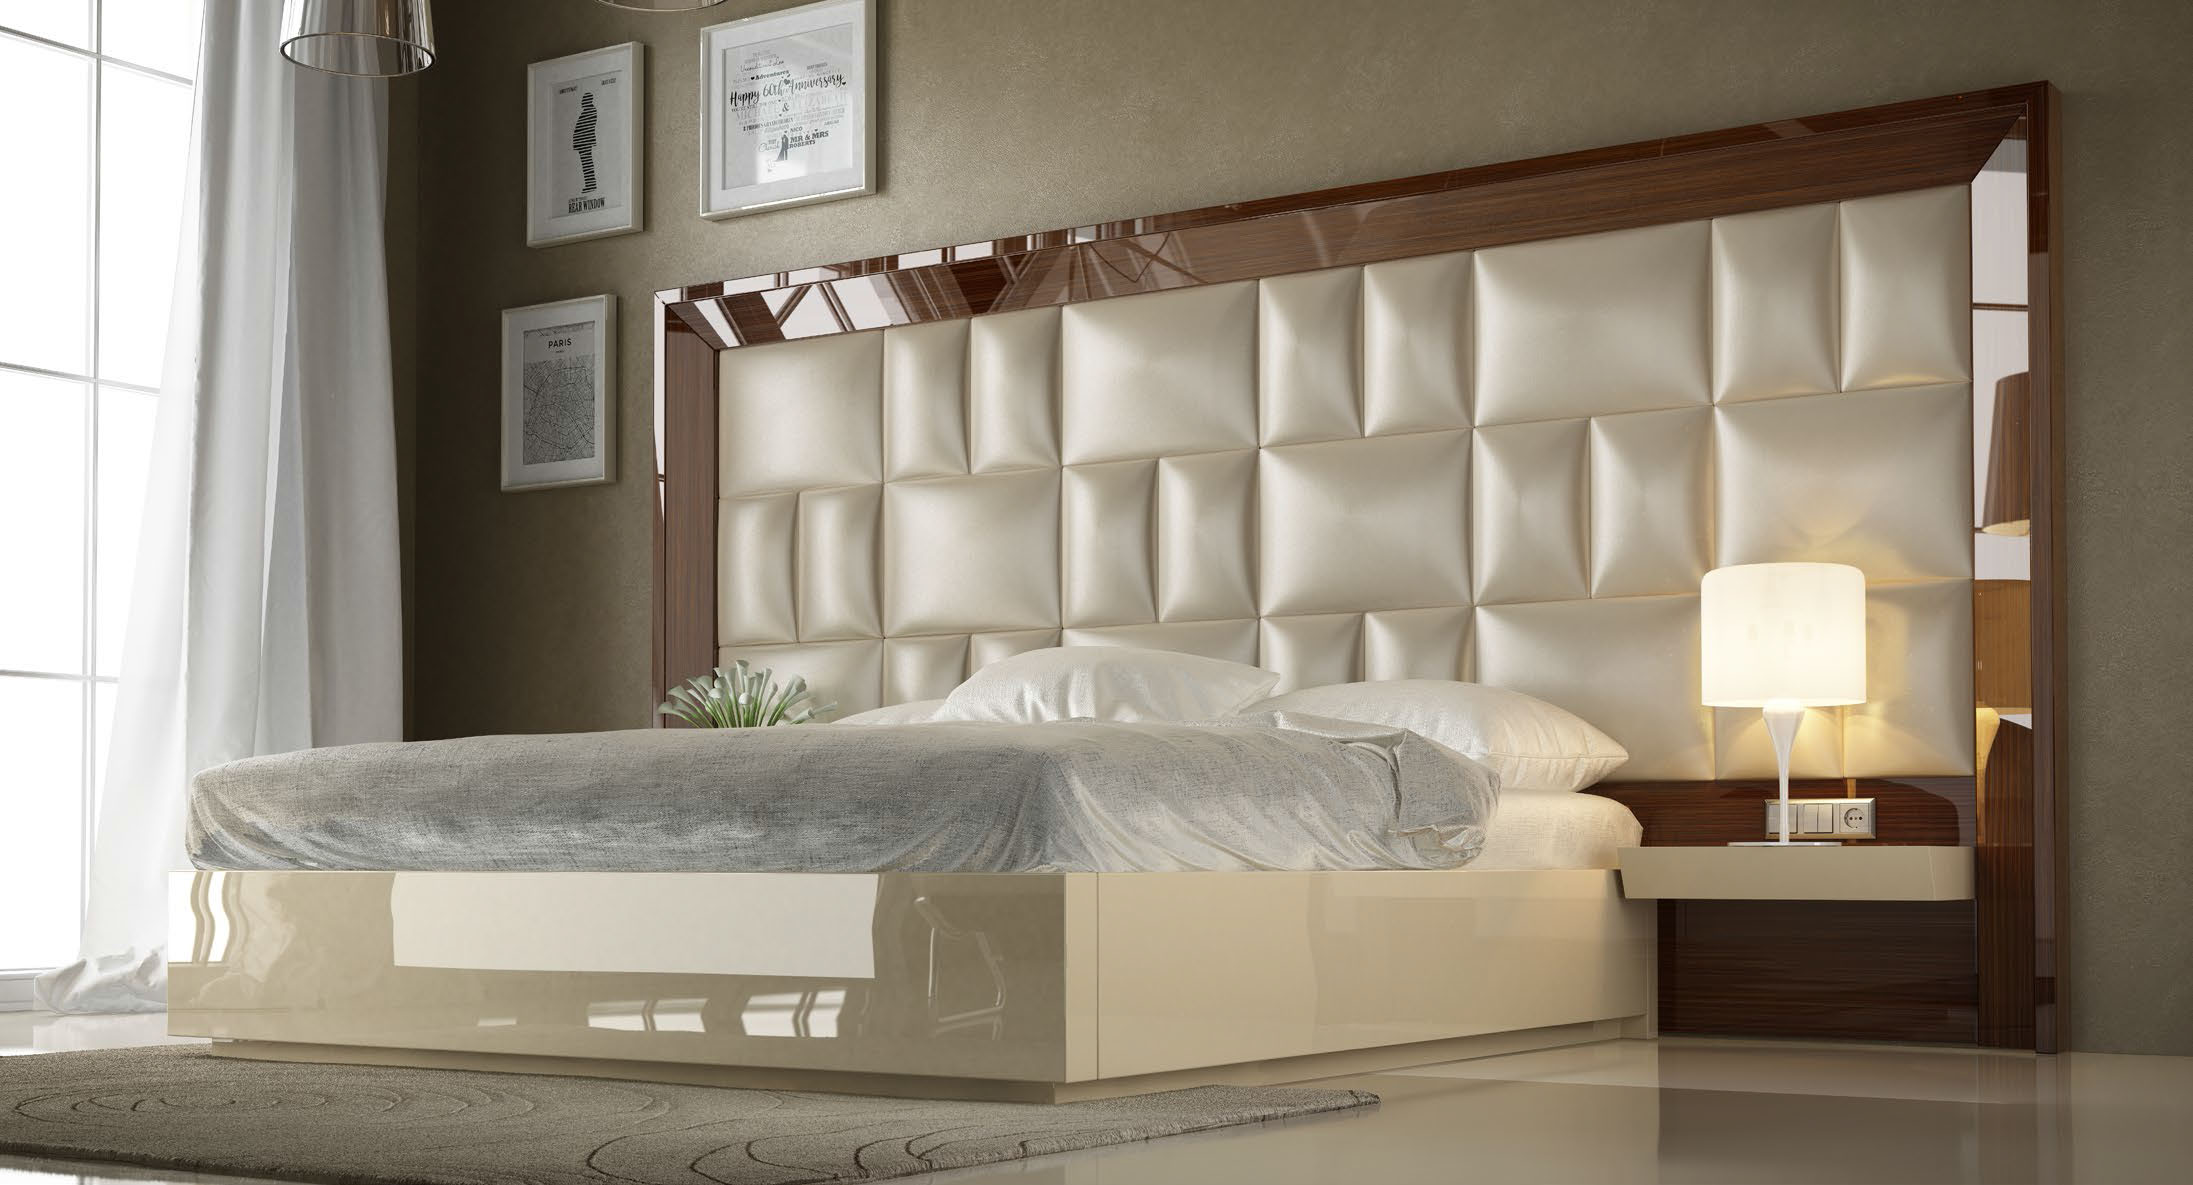 Brands Franco Furniture Bedrooms vol3, Spain DOR 132